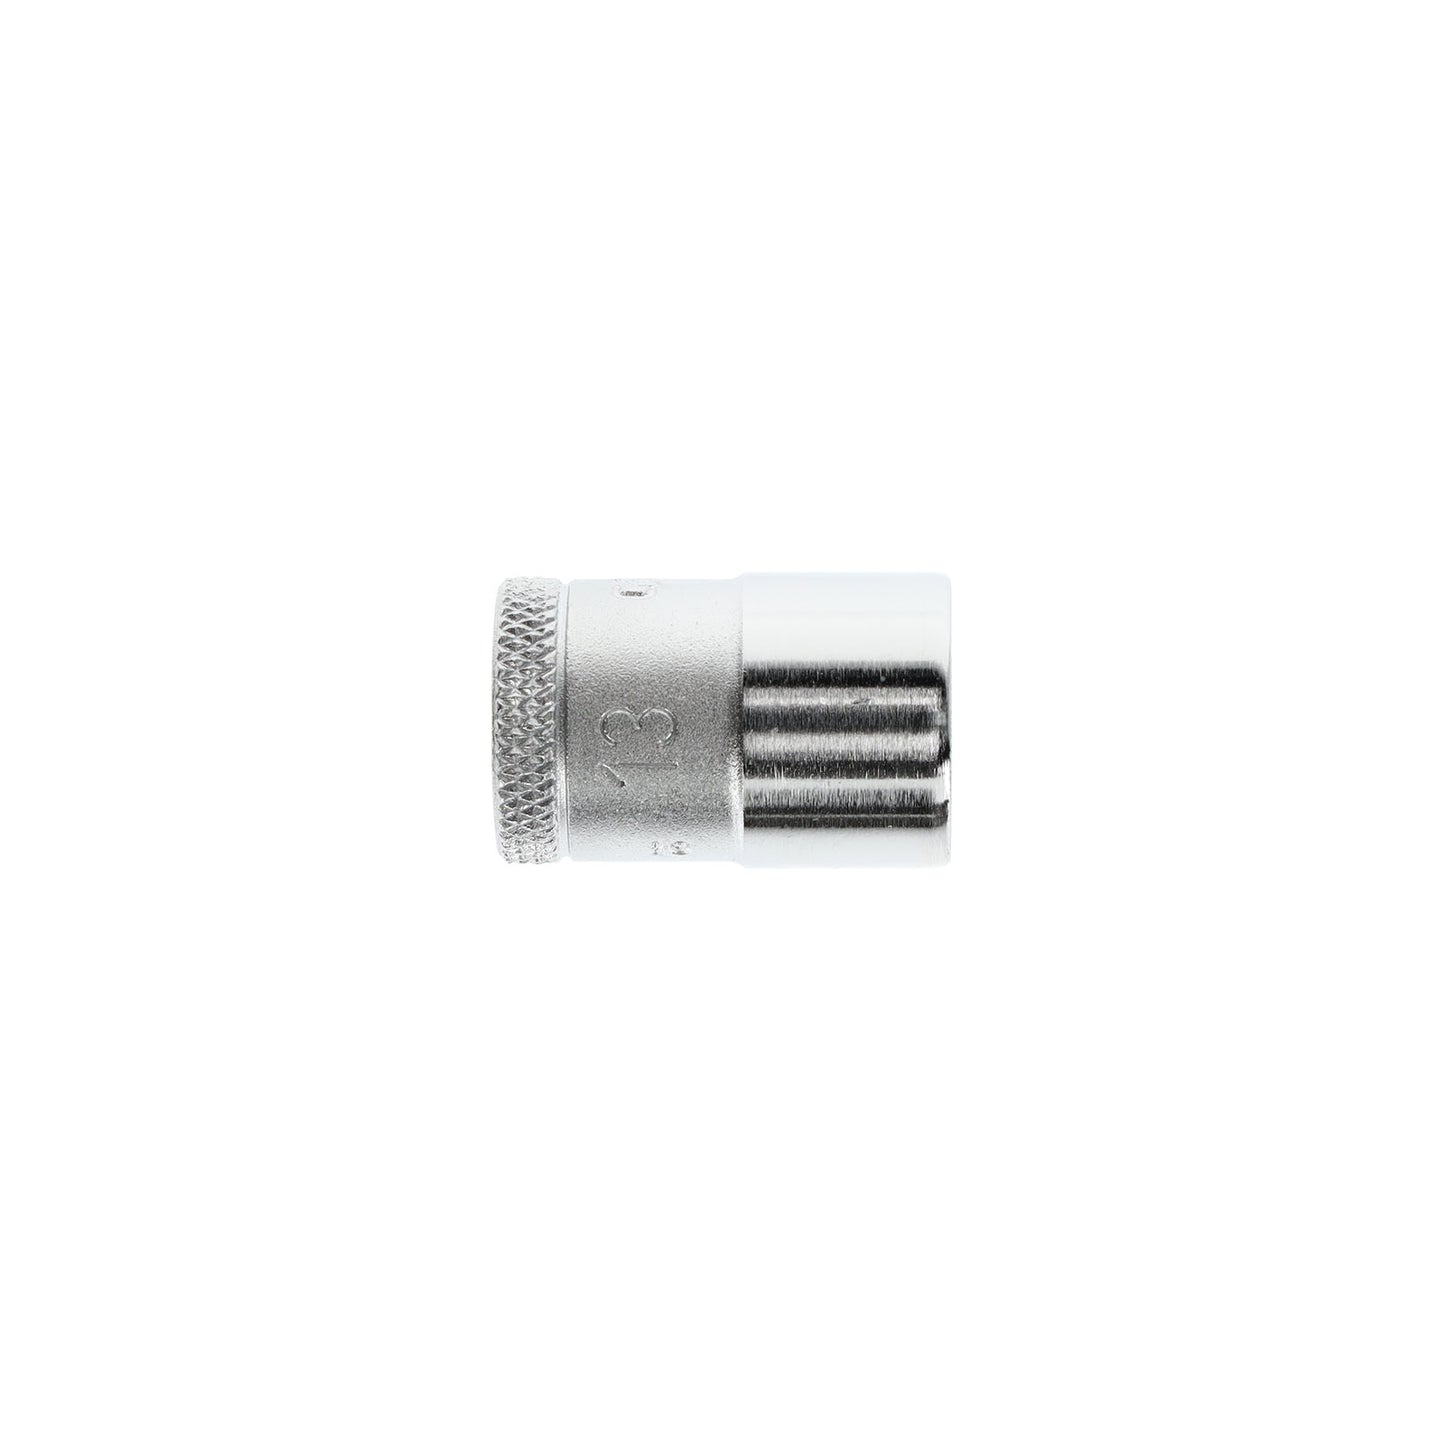 GEDORE 30 13 - Hexagonal socket 3/8", 13 mm (6234070)